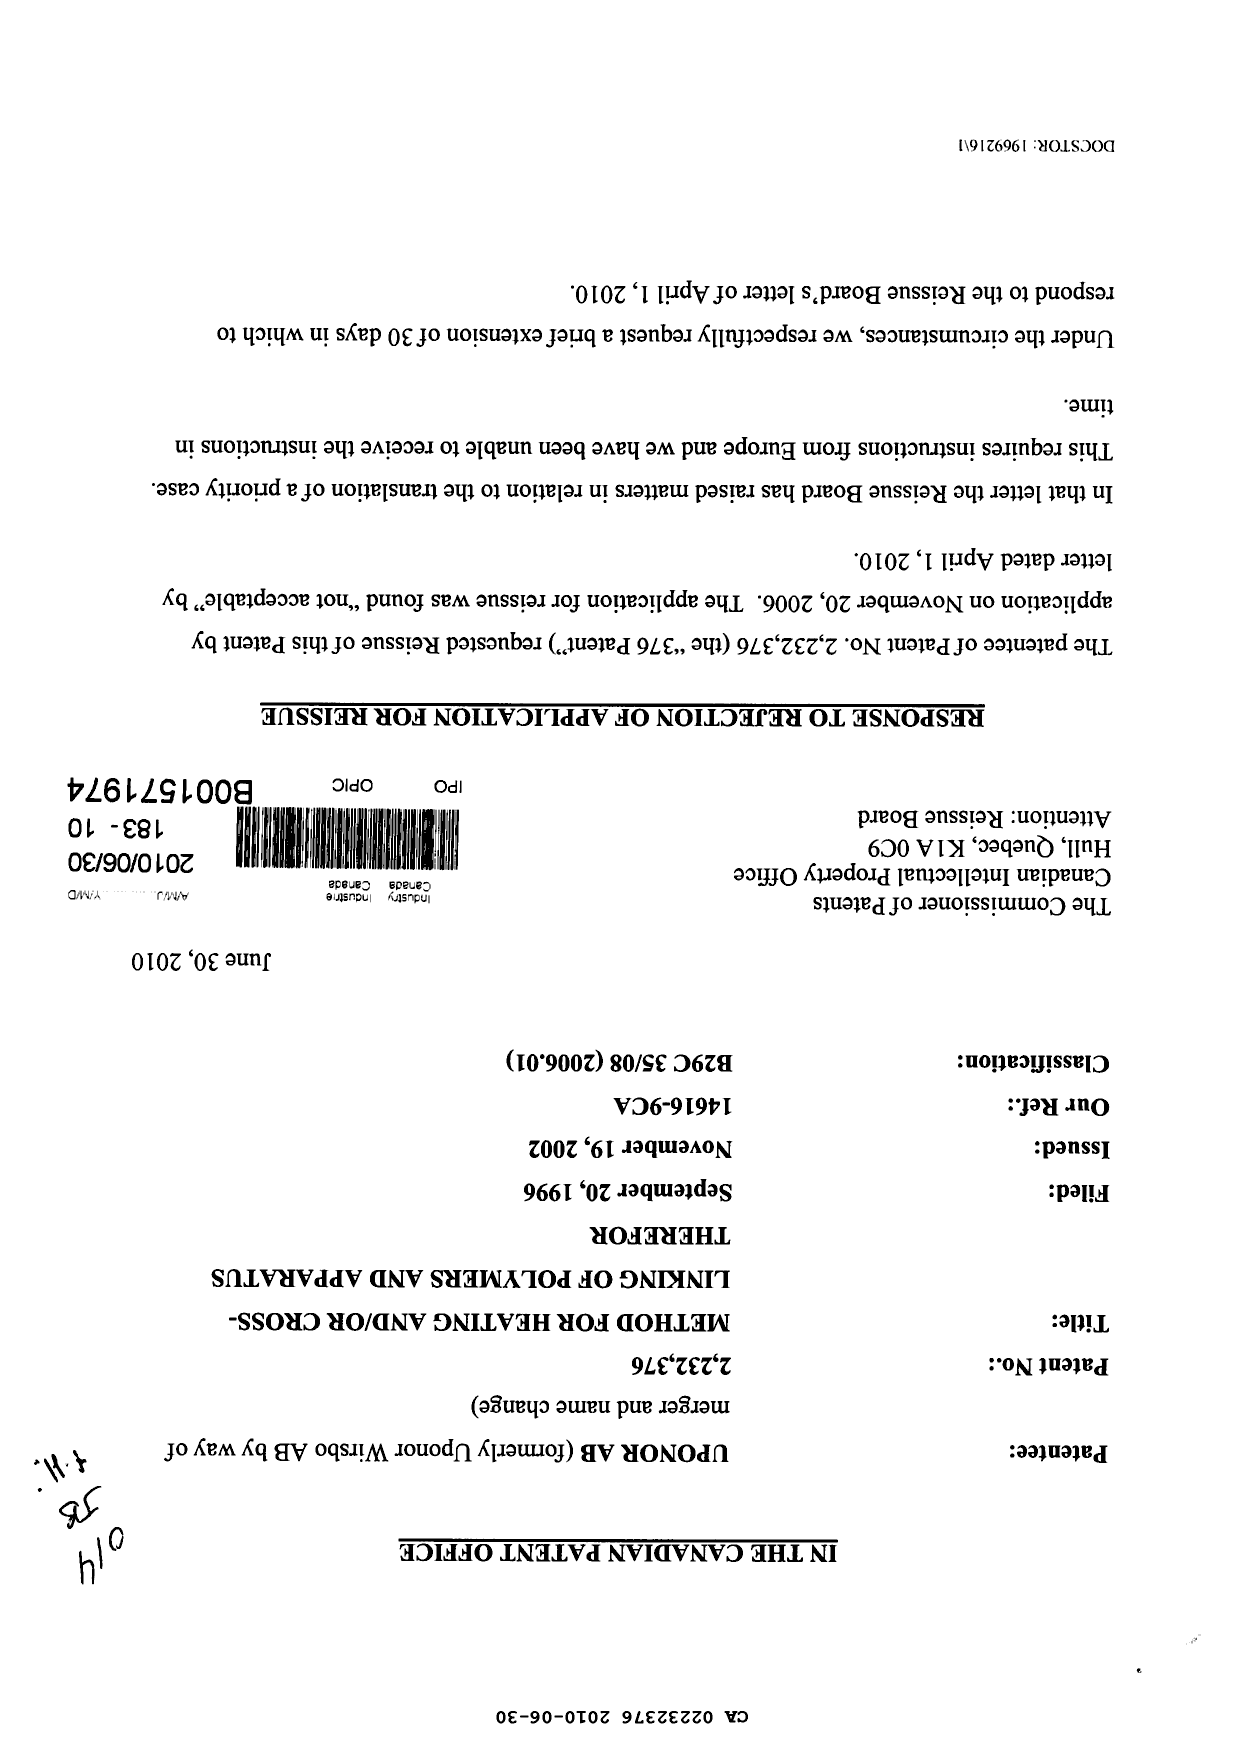 Canadian Patent Document 2232376. Correspondence 20091230. Image 1 of 2